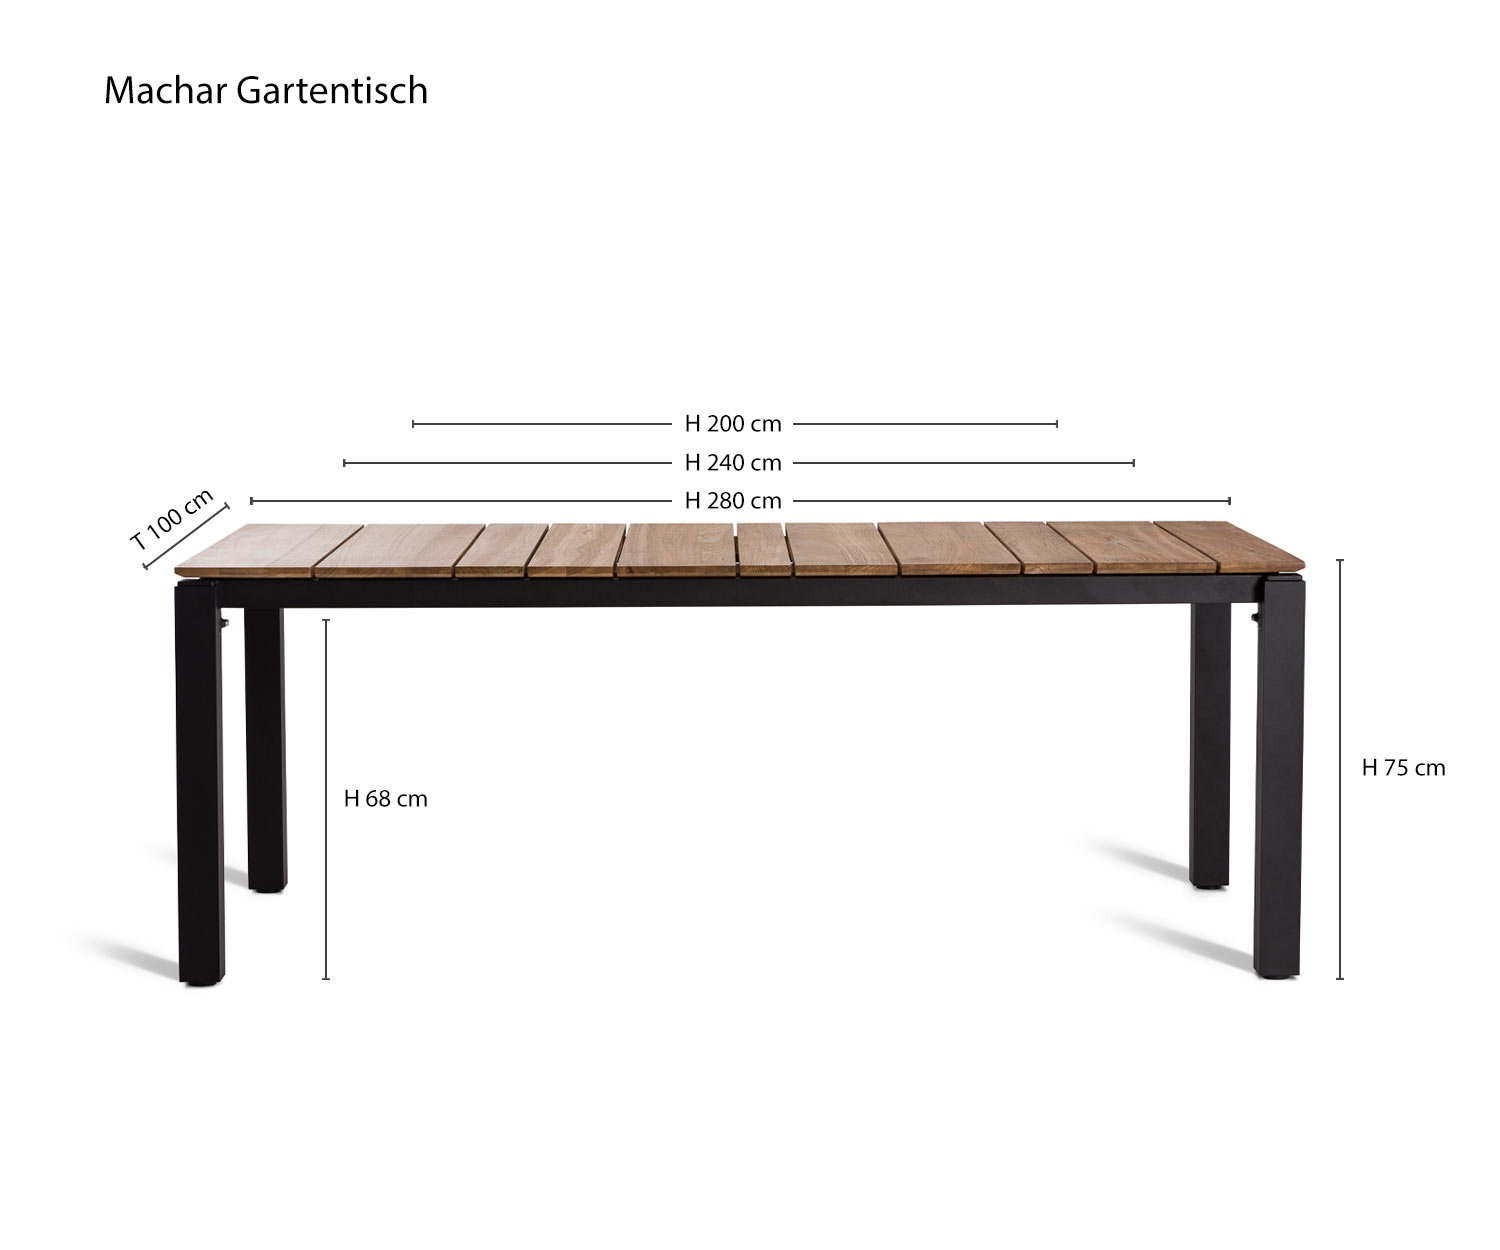 Robust designer garden table Machar from Oasiq Dimensions Sketch Sizes Sizes